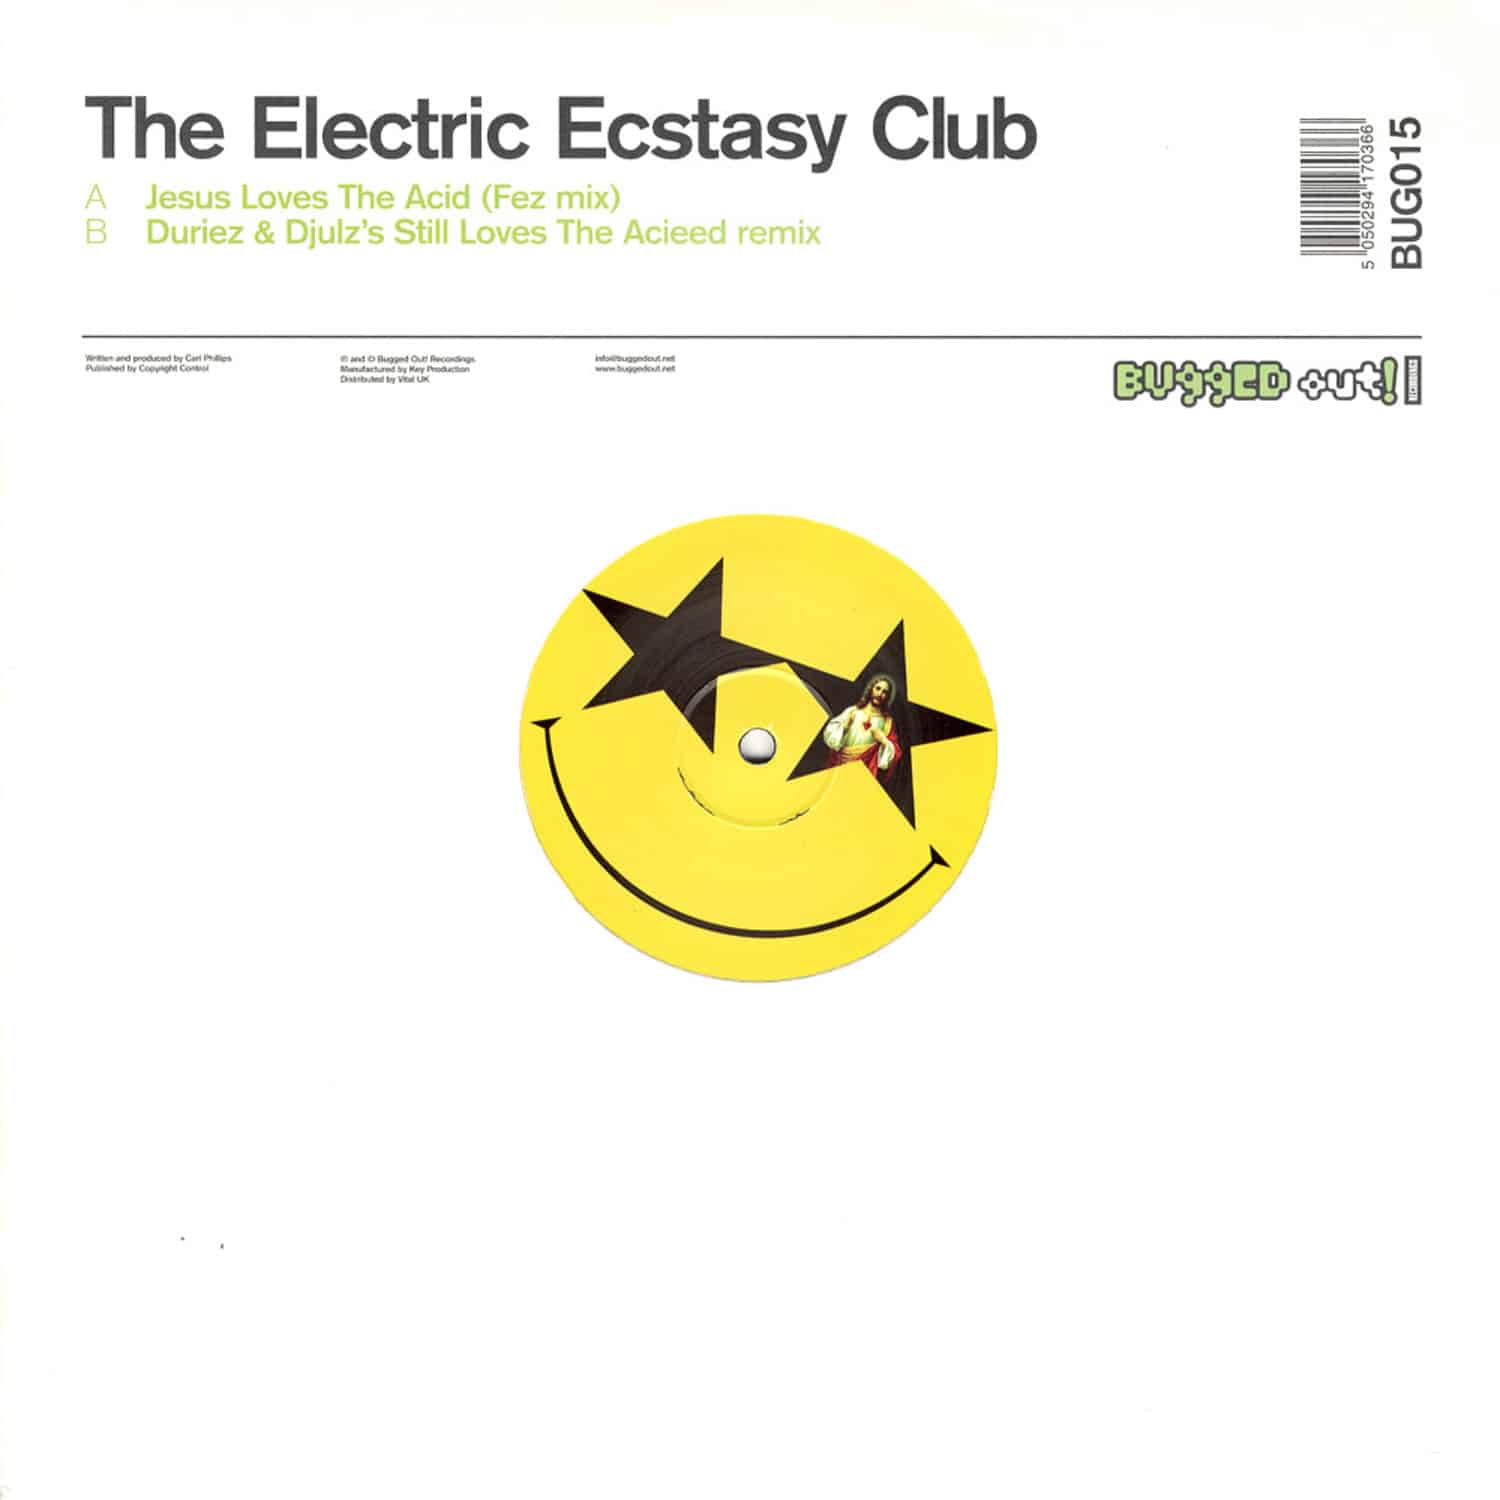 The Electric Ecstasy Club - JESUS LOVES THE ACID